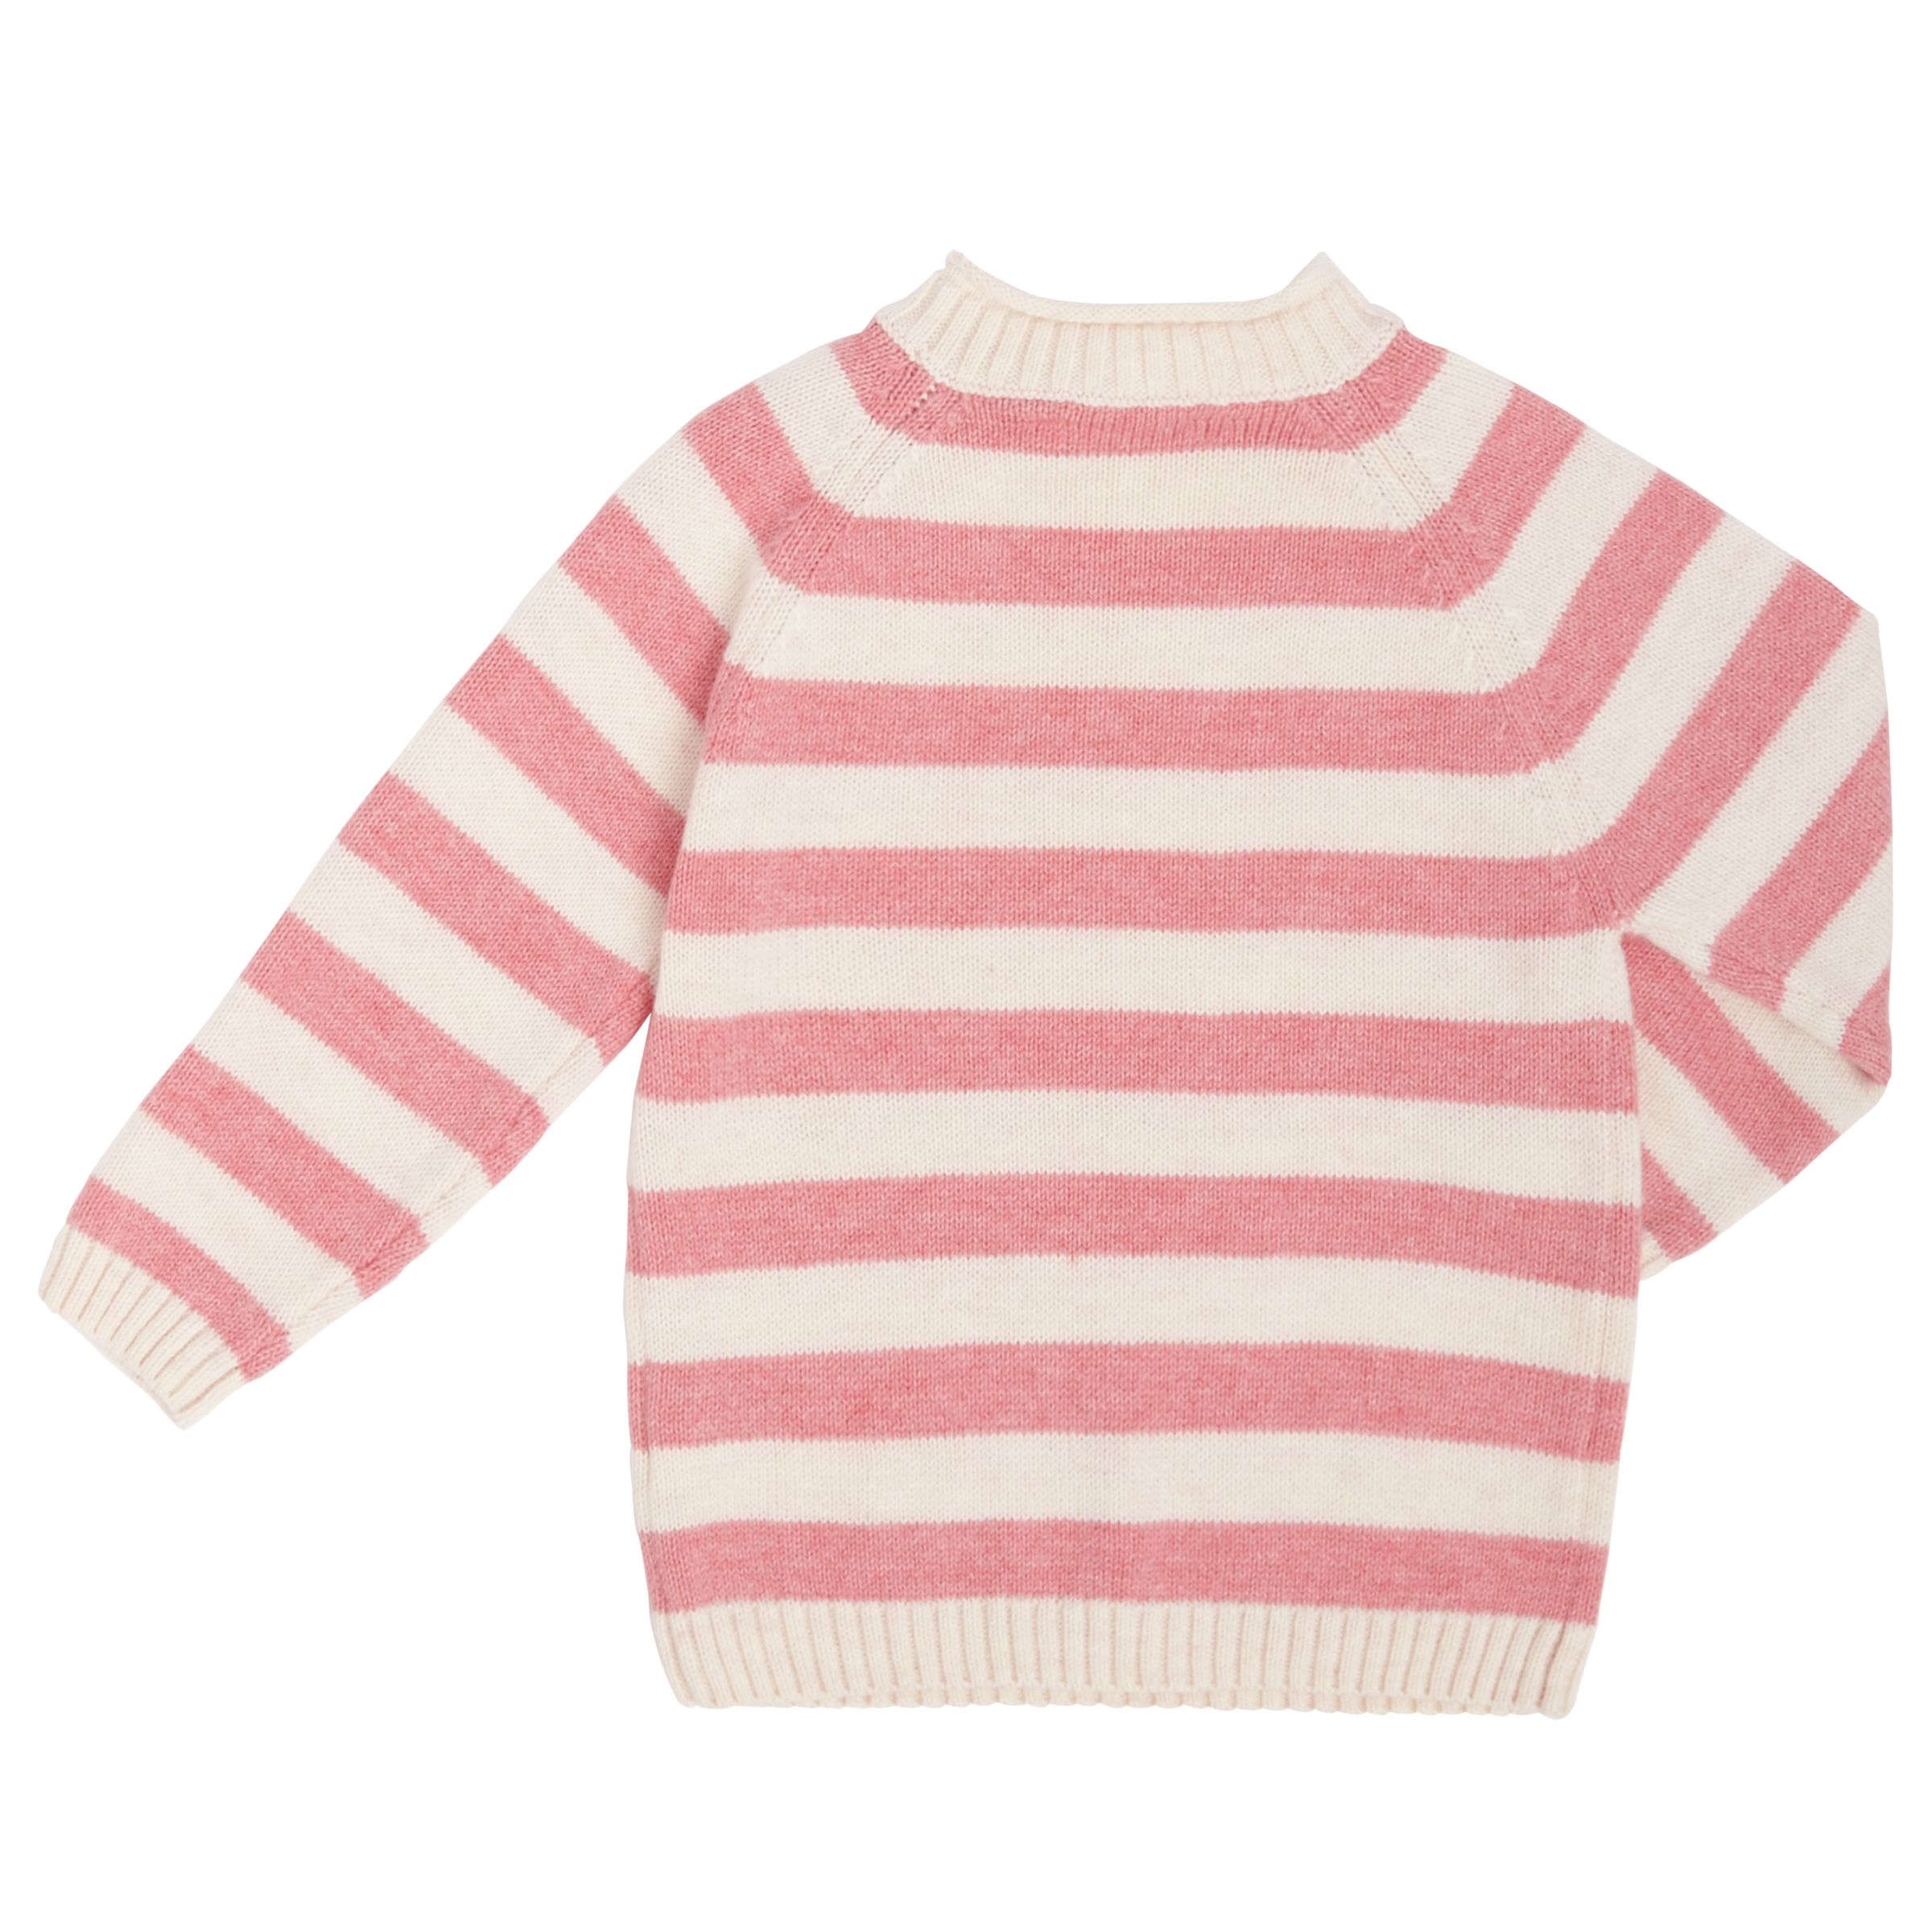 John Lewis & Partners Baby Stripe Jumper, Pink